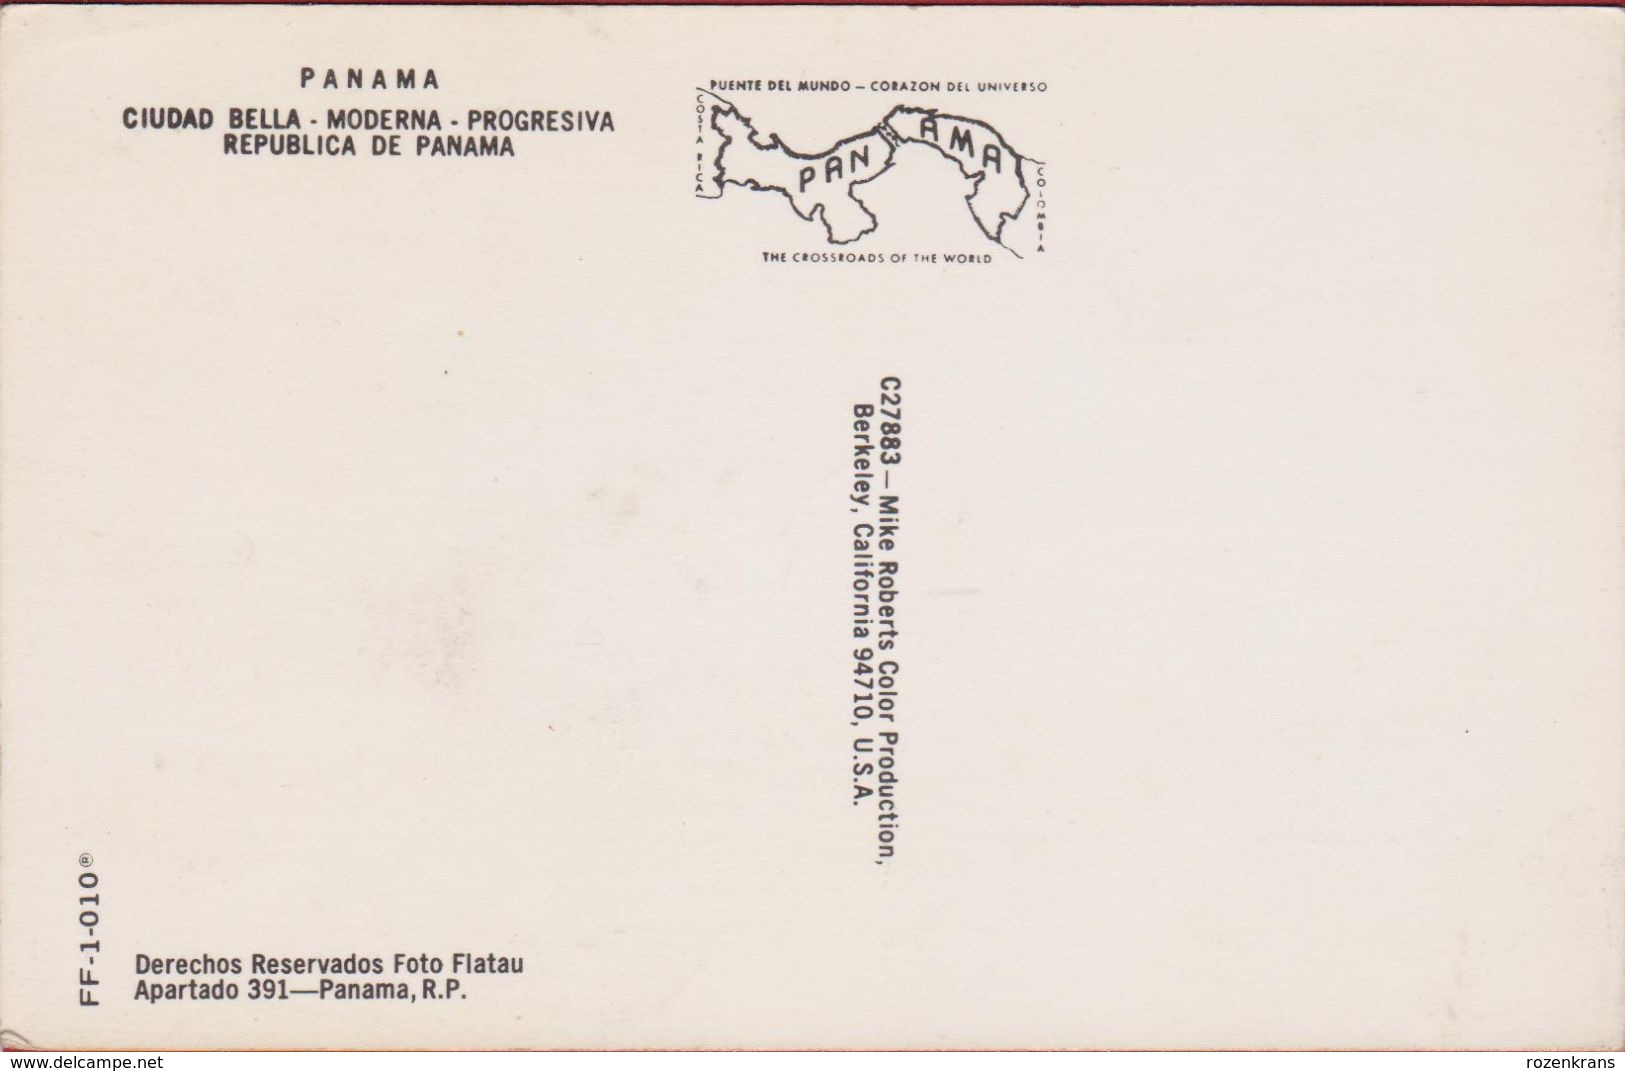 Panama Puento Del Mundo Corazon Del Universo Tarjeta Postal - Panama